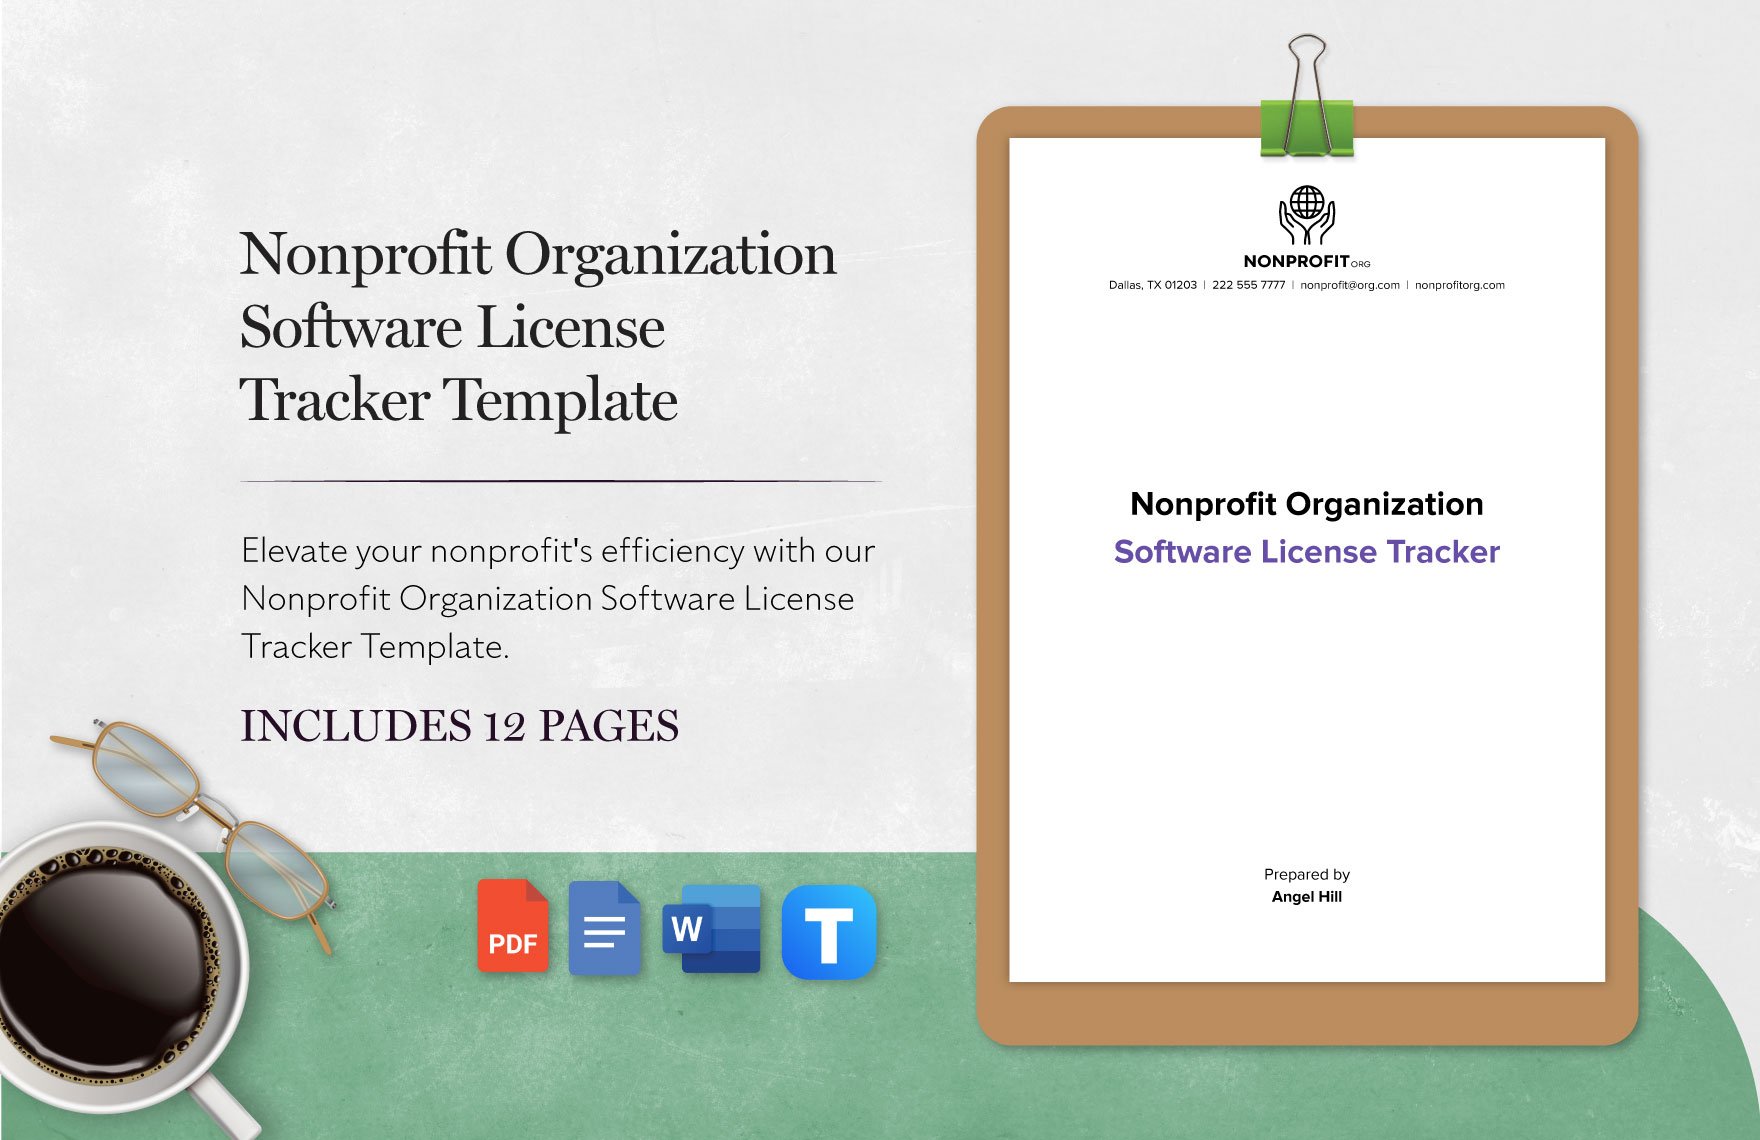 Nonprofit Organization Software License Tracker Template in Word, Google Docs, PDF